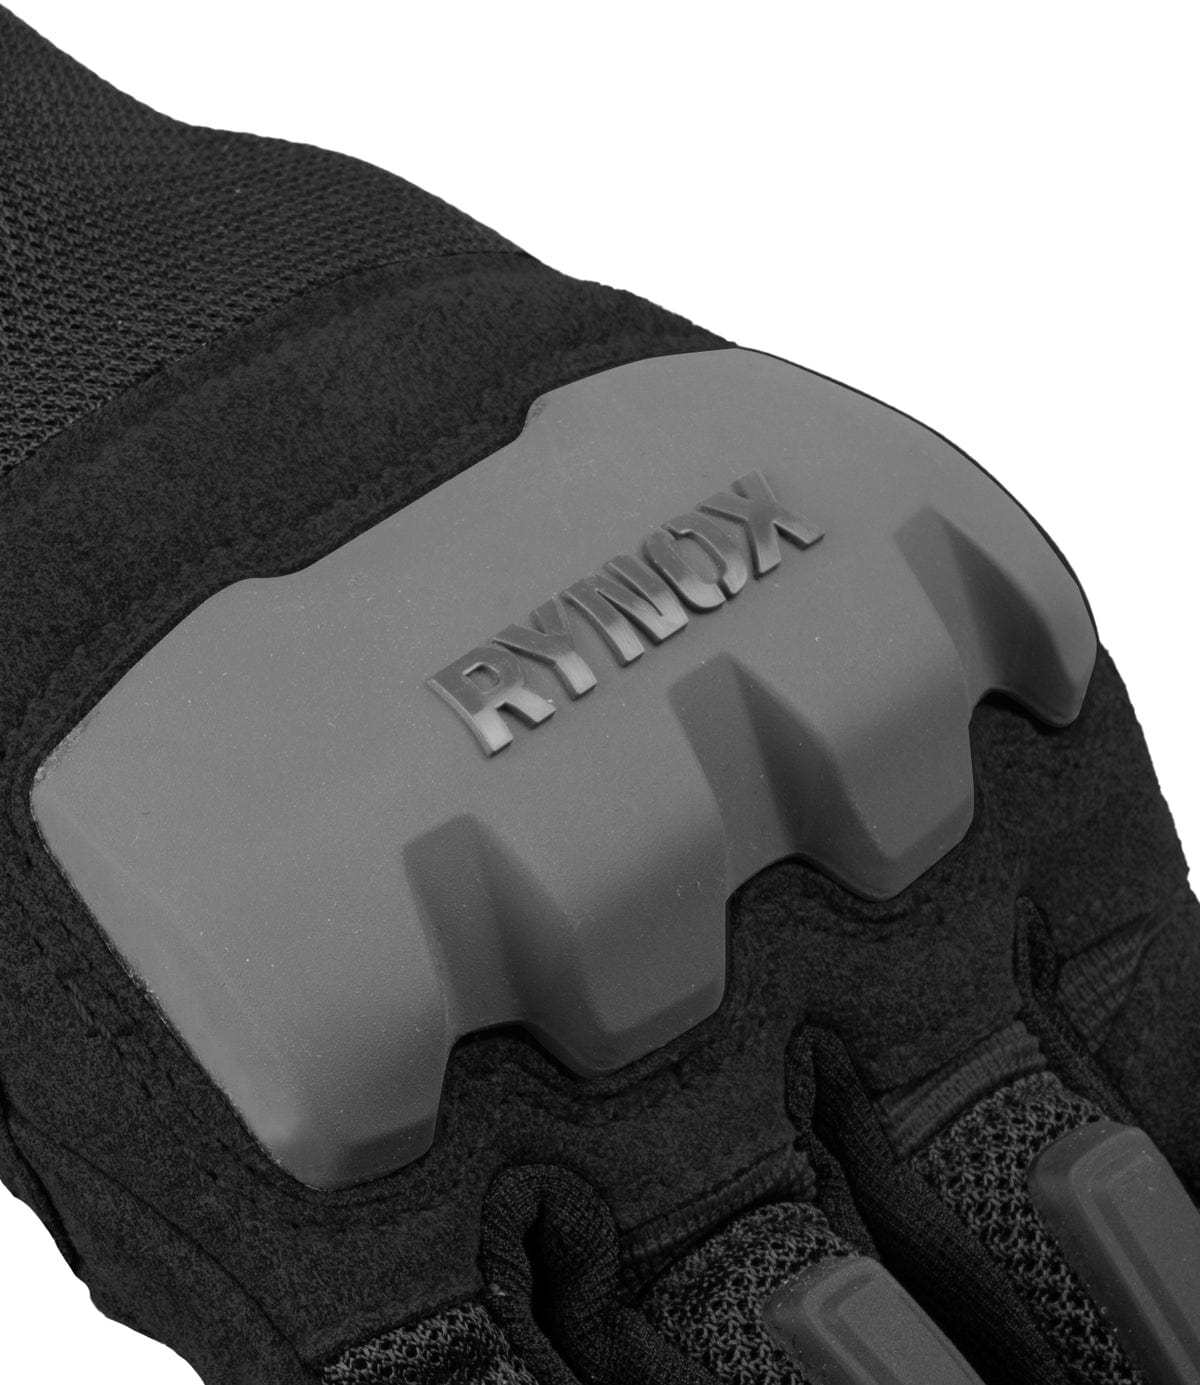 Destination Moto Rynox Urban Pro Gloves (Black)